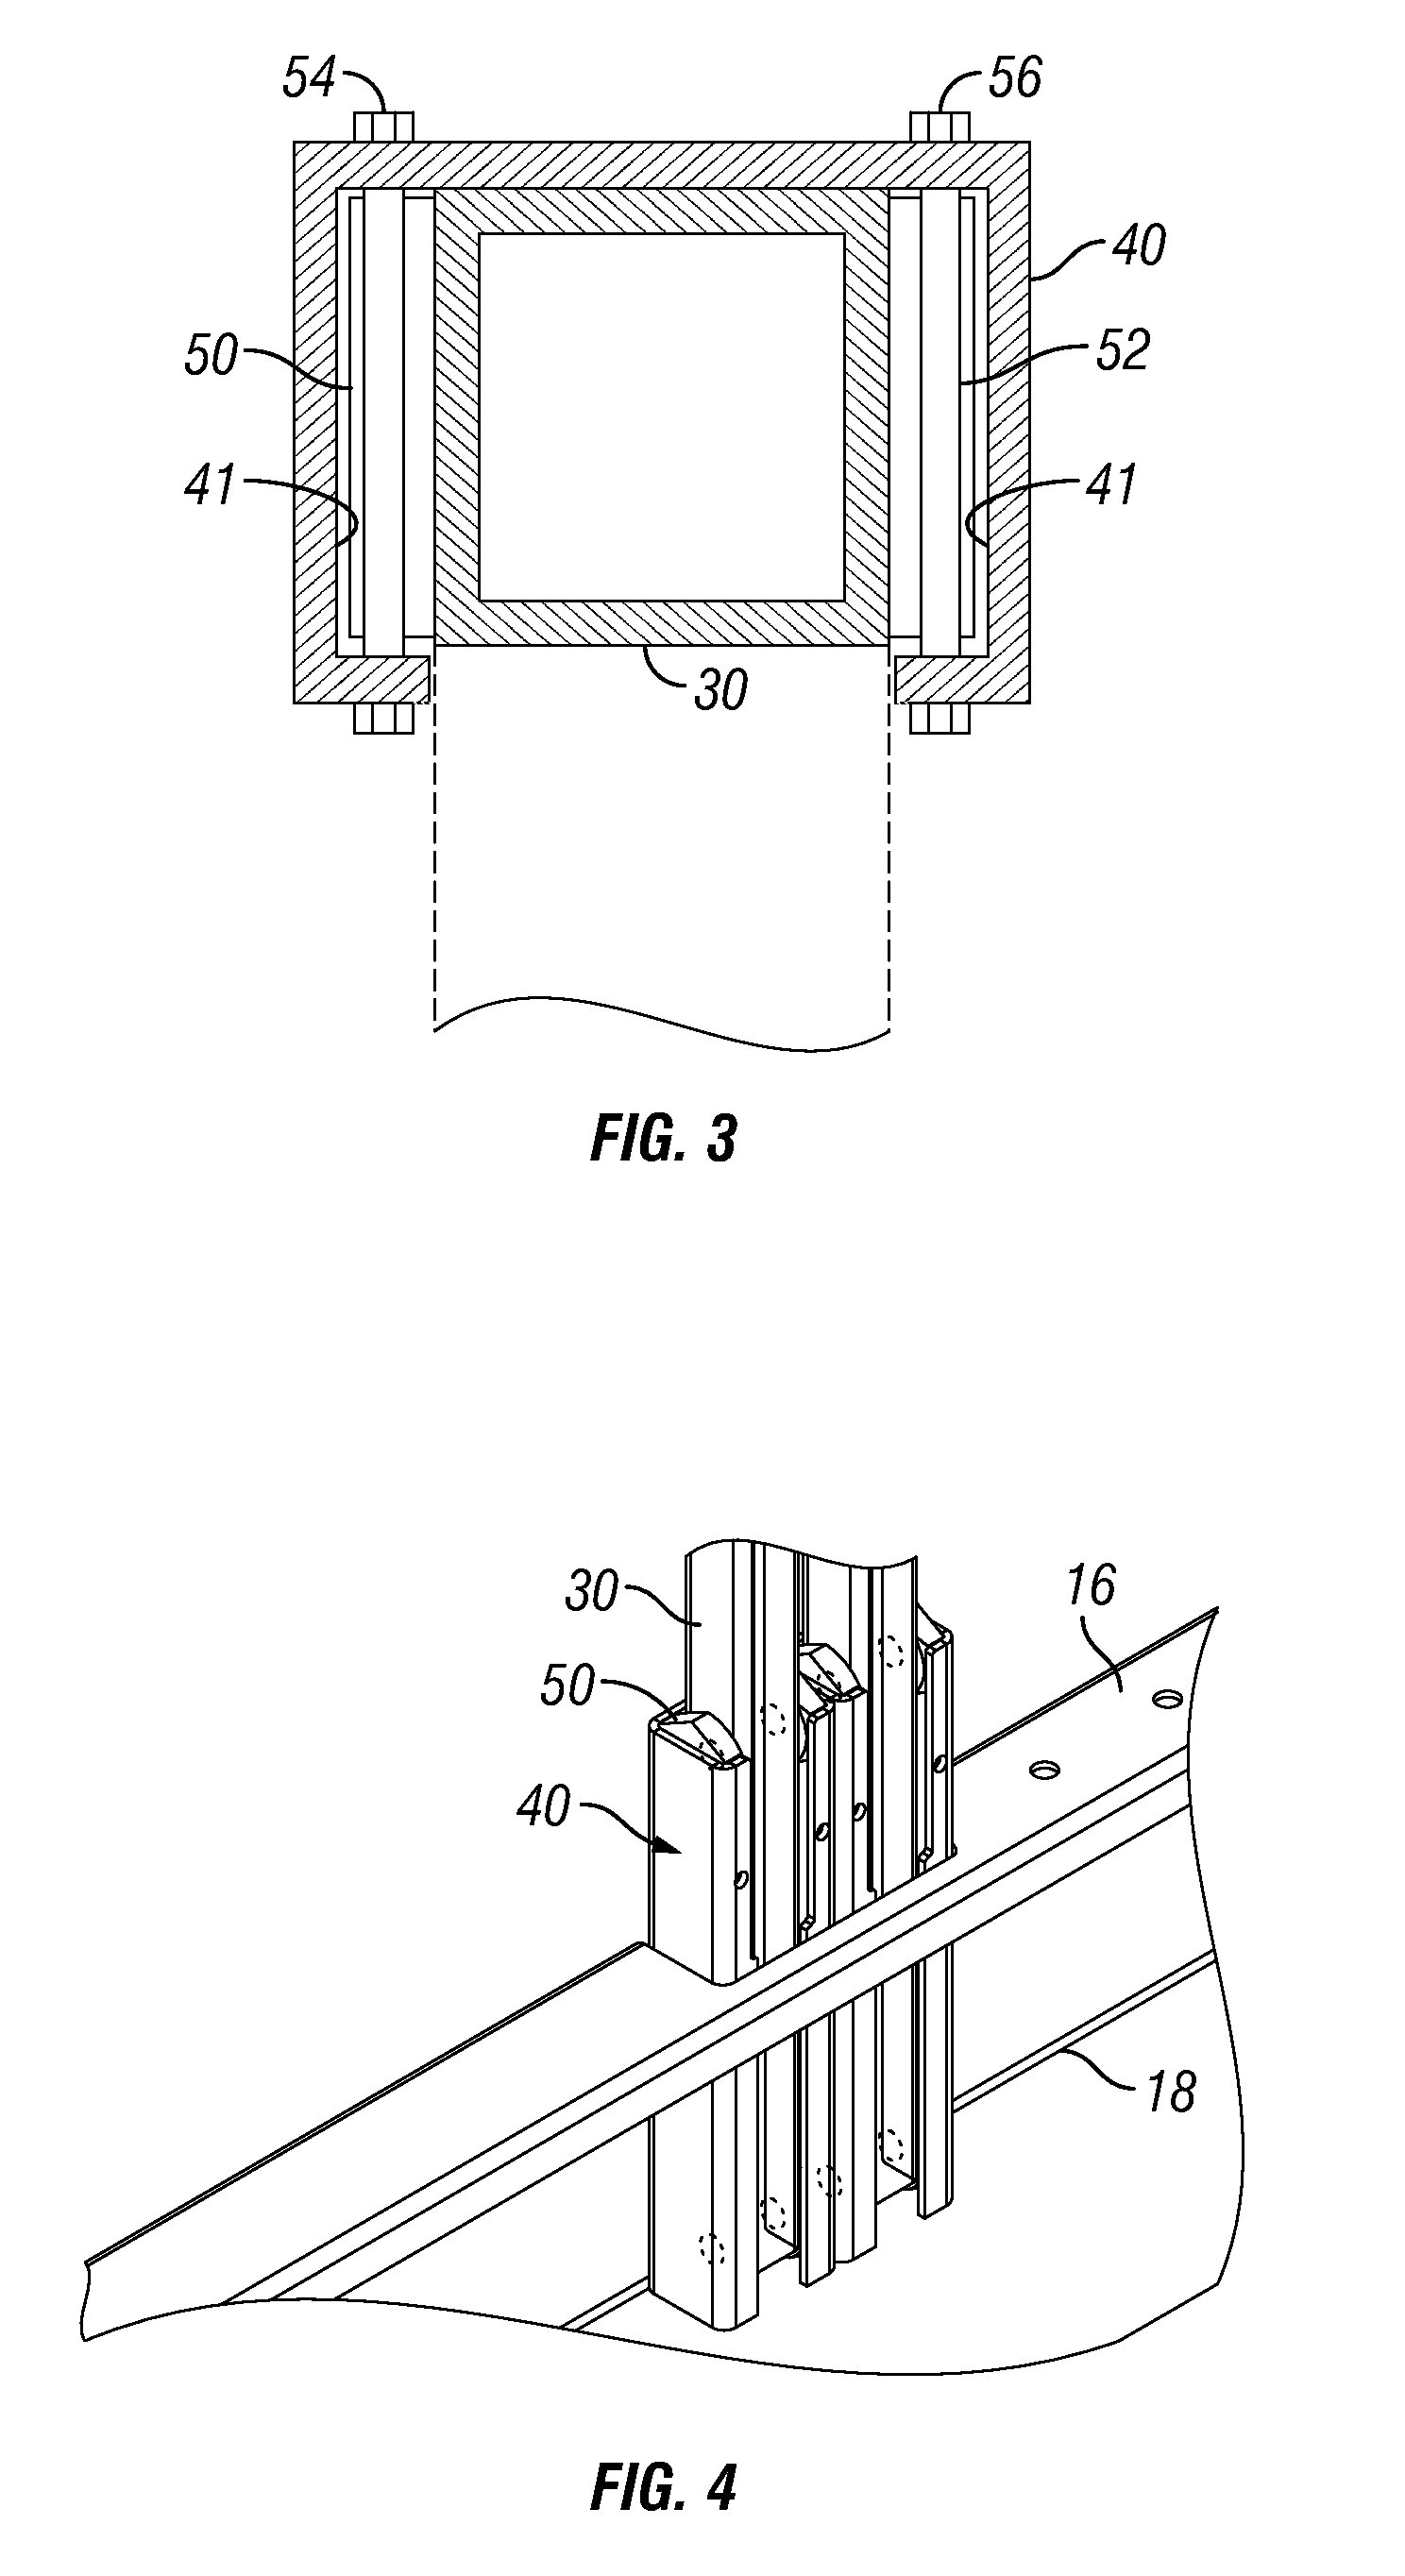 Aerial work platform and pinless guardrail